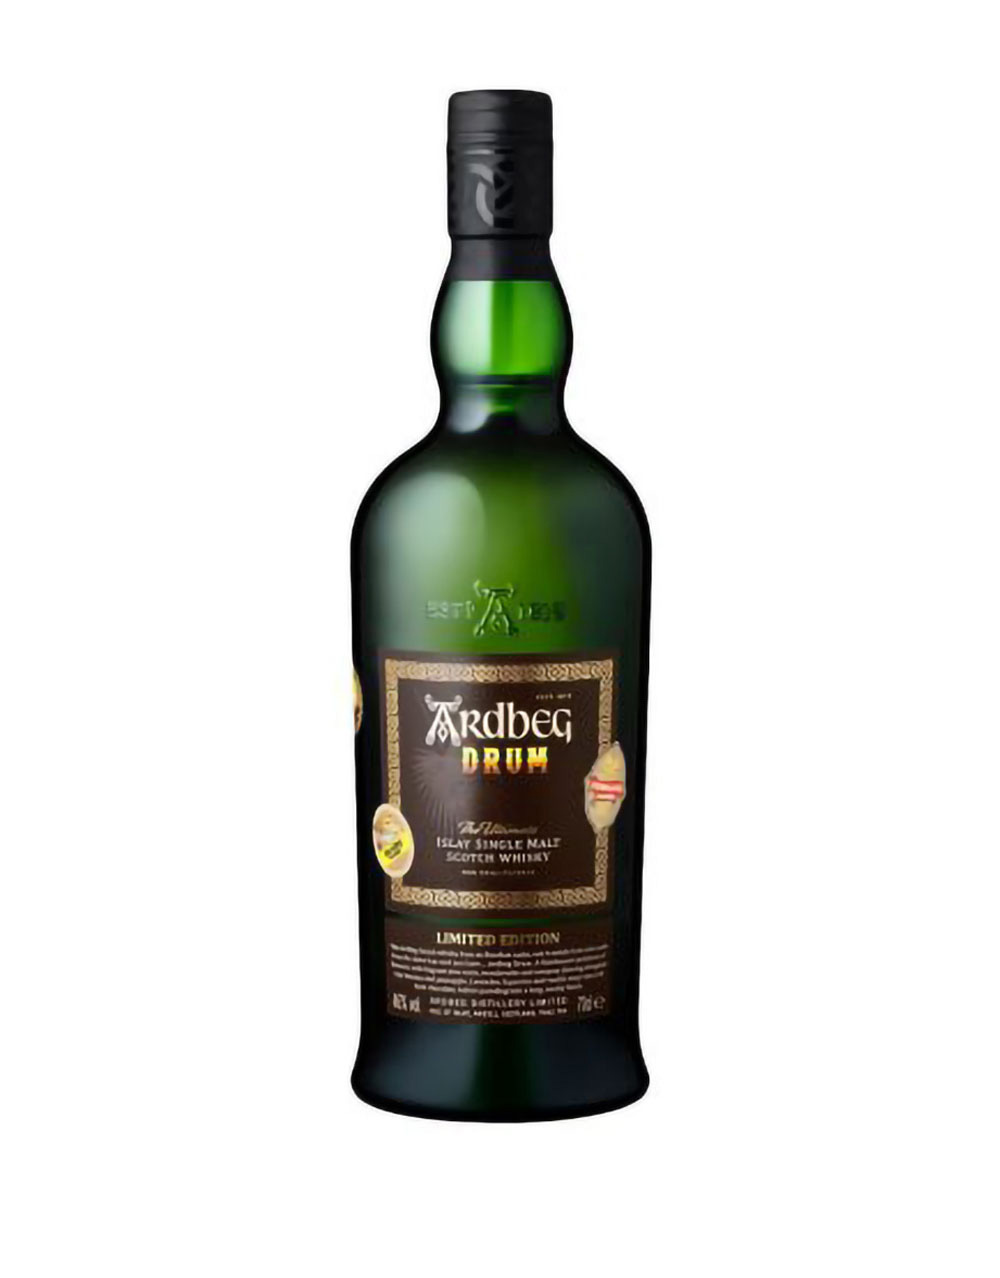 Ardbeg Drum Limited Edition Single Malt Scotch Whisky